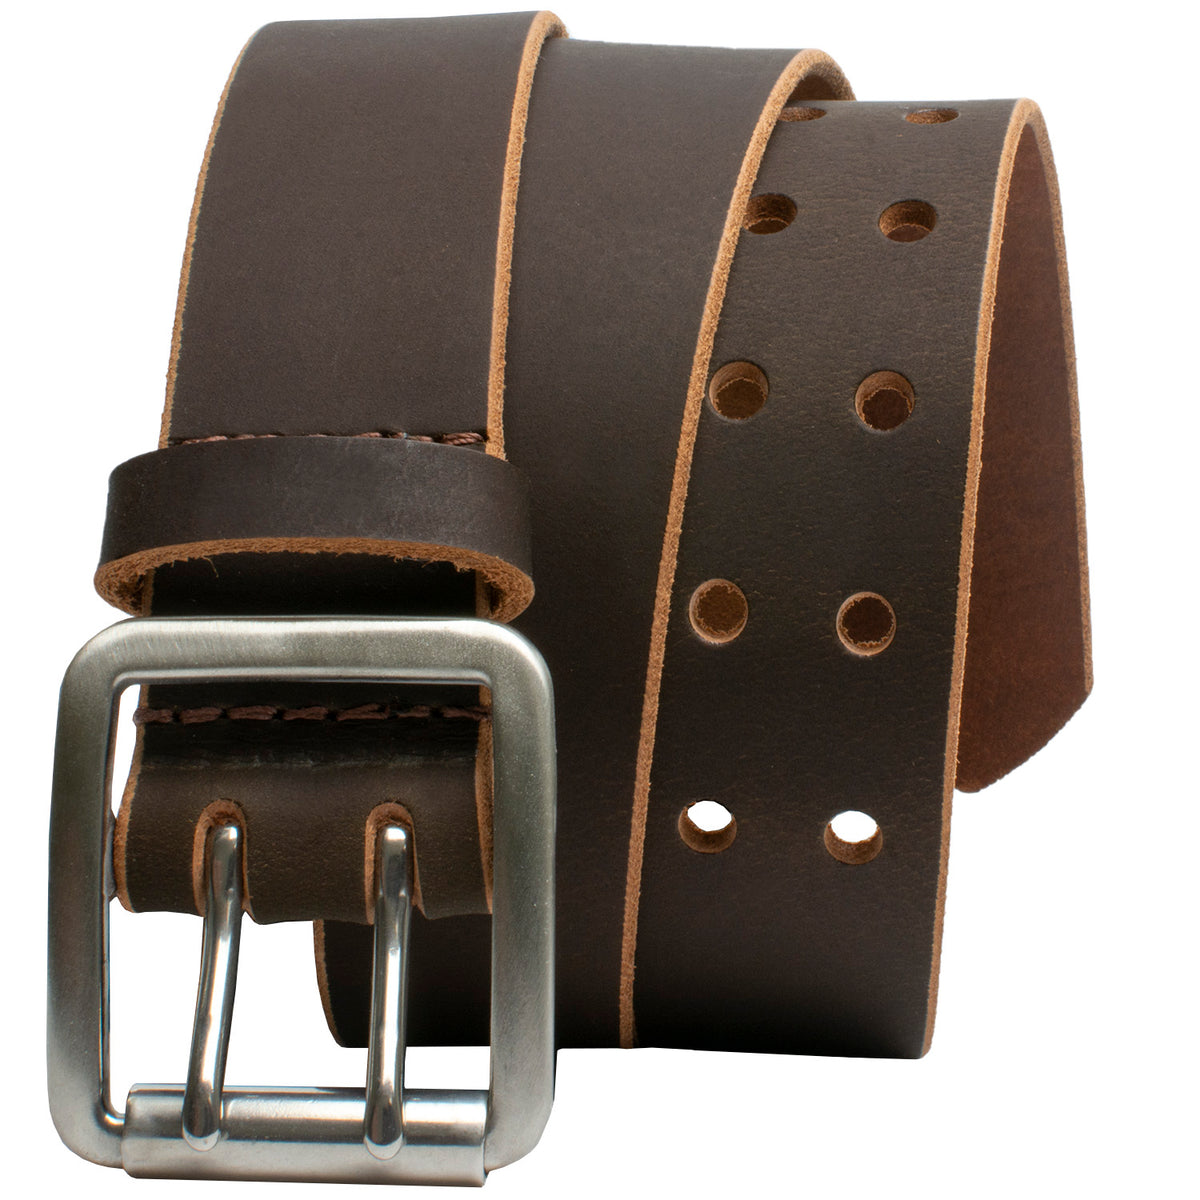 Ridgeline Trail Black Belt | Heavy Duty Work Belt | USA Made | Durable 54 inch (+$14.00) / Black / Stainless Steel/Leather